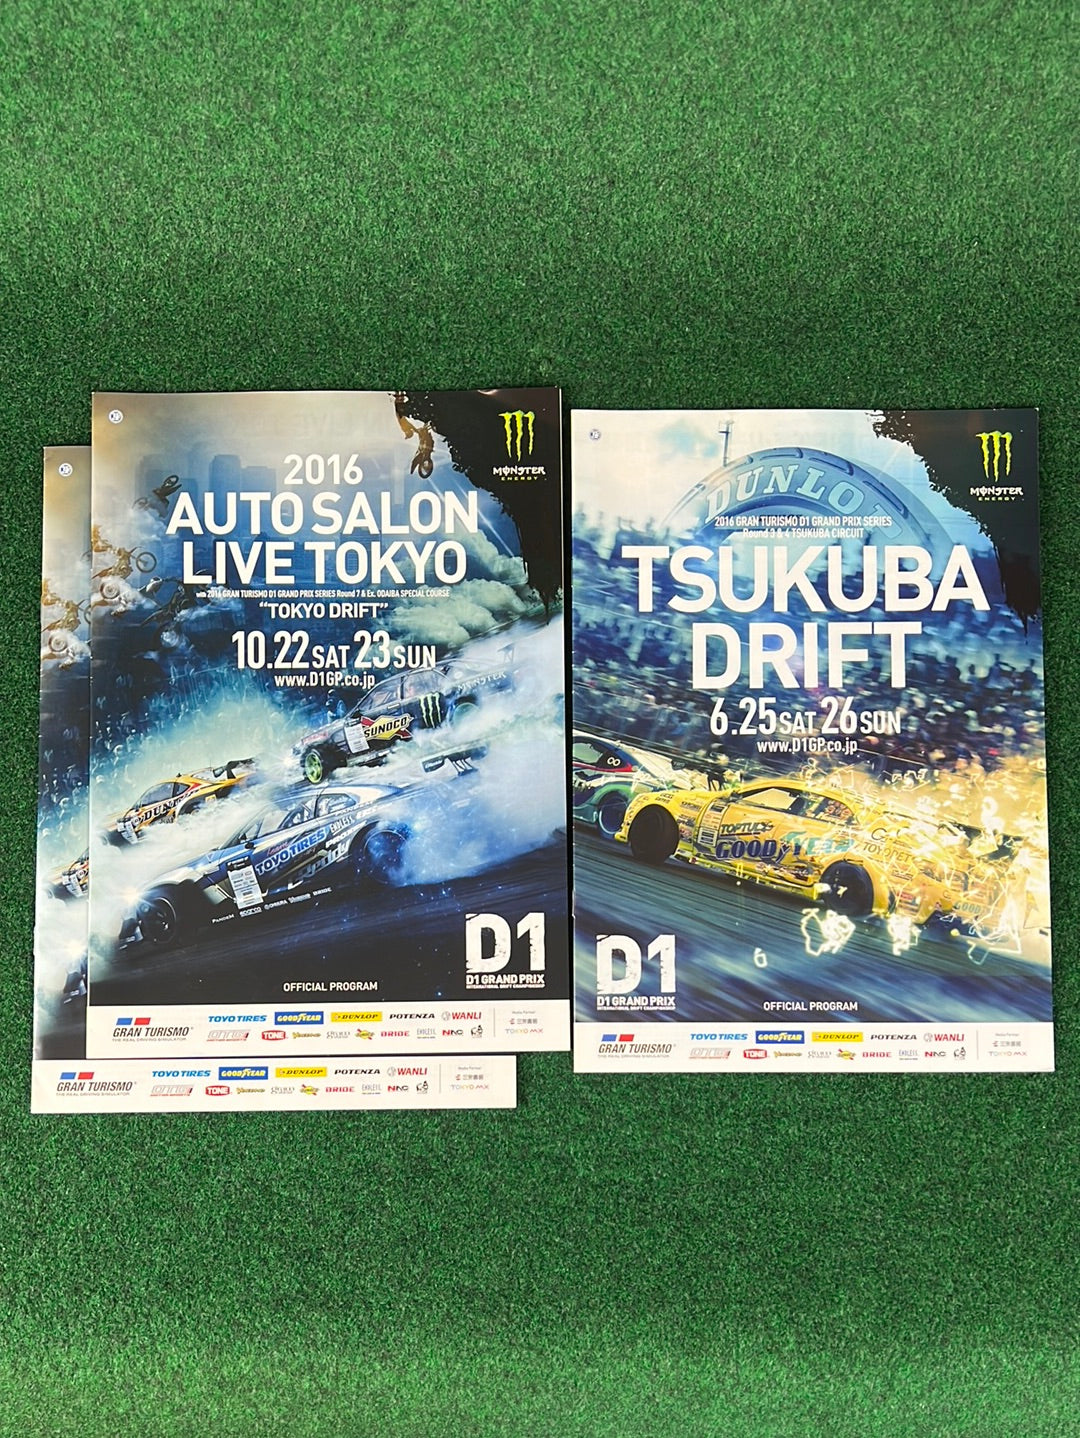 D1 Grand Prix D1GP 2016 - Tsukuba Circuit & Auto Salon Live Tokyo Event Program Set